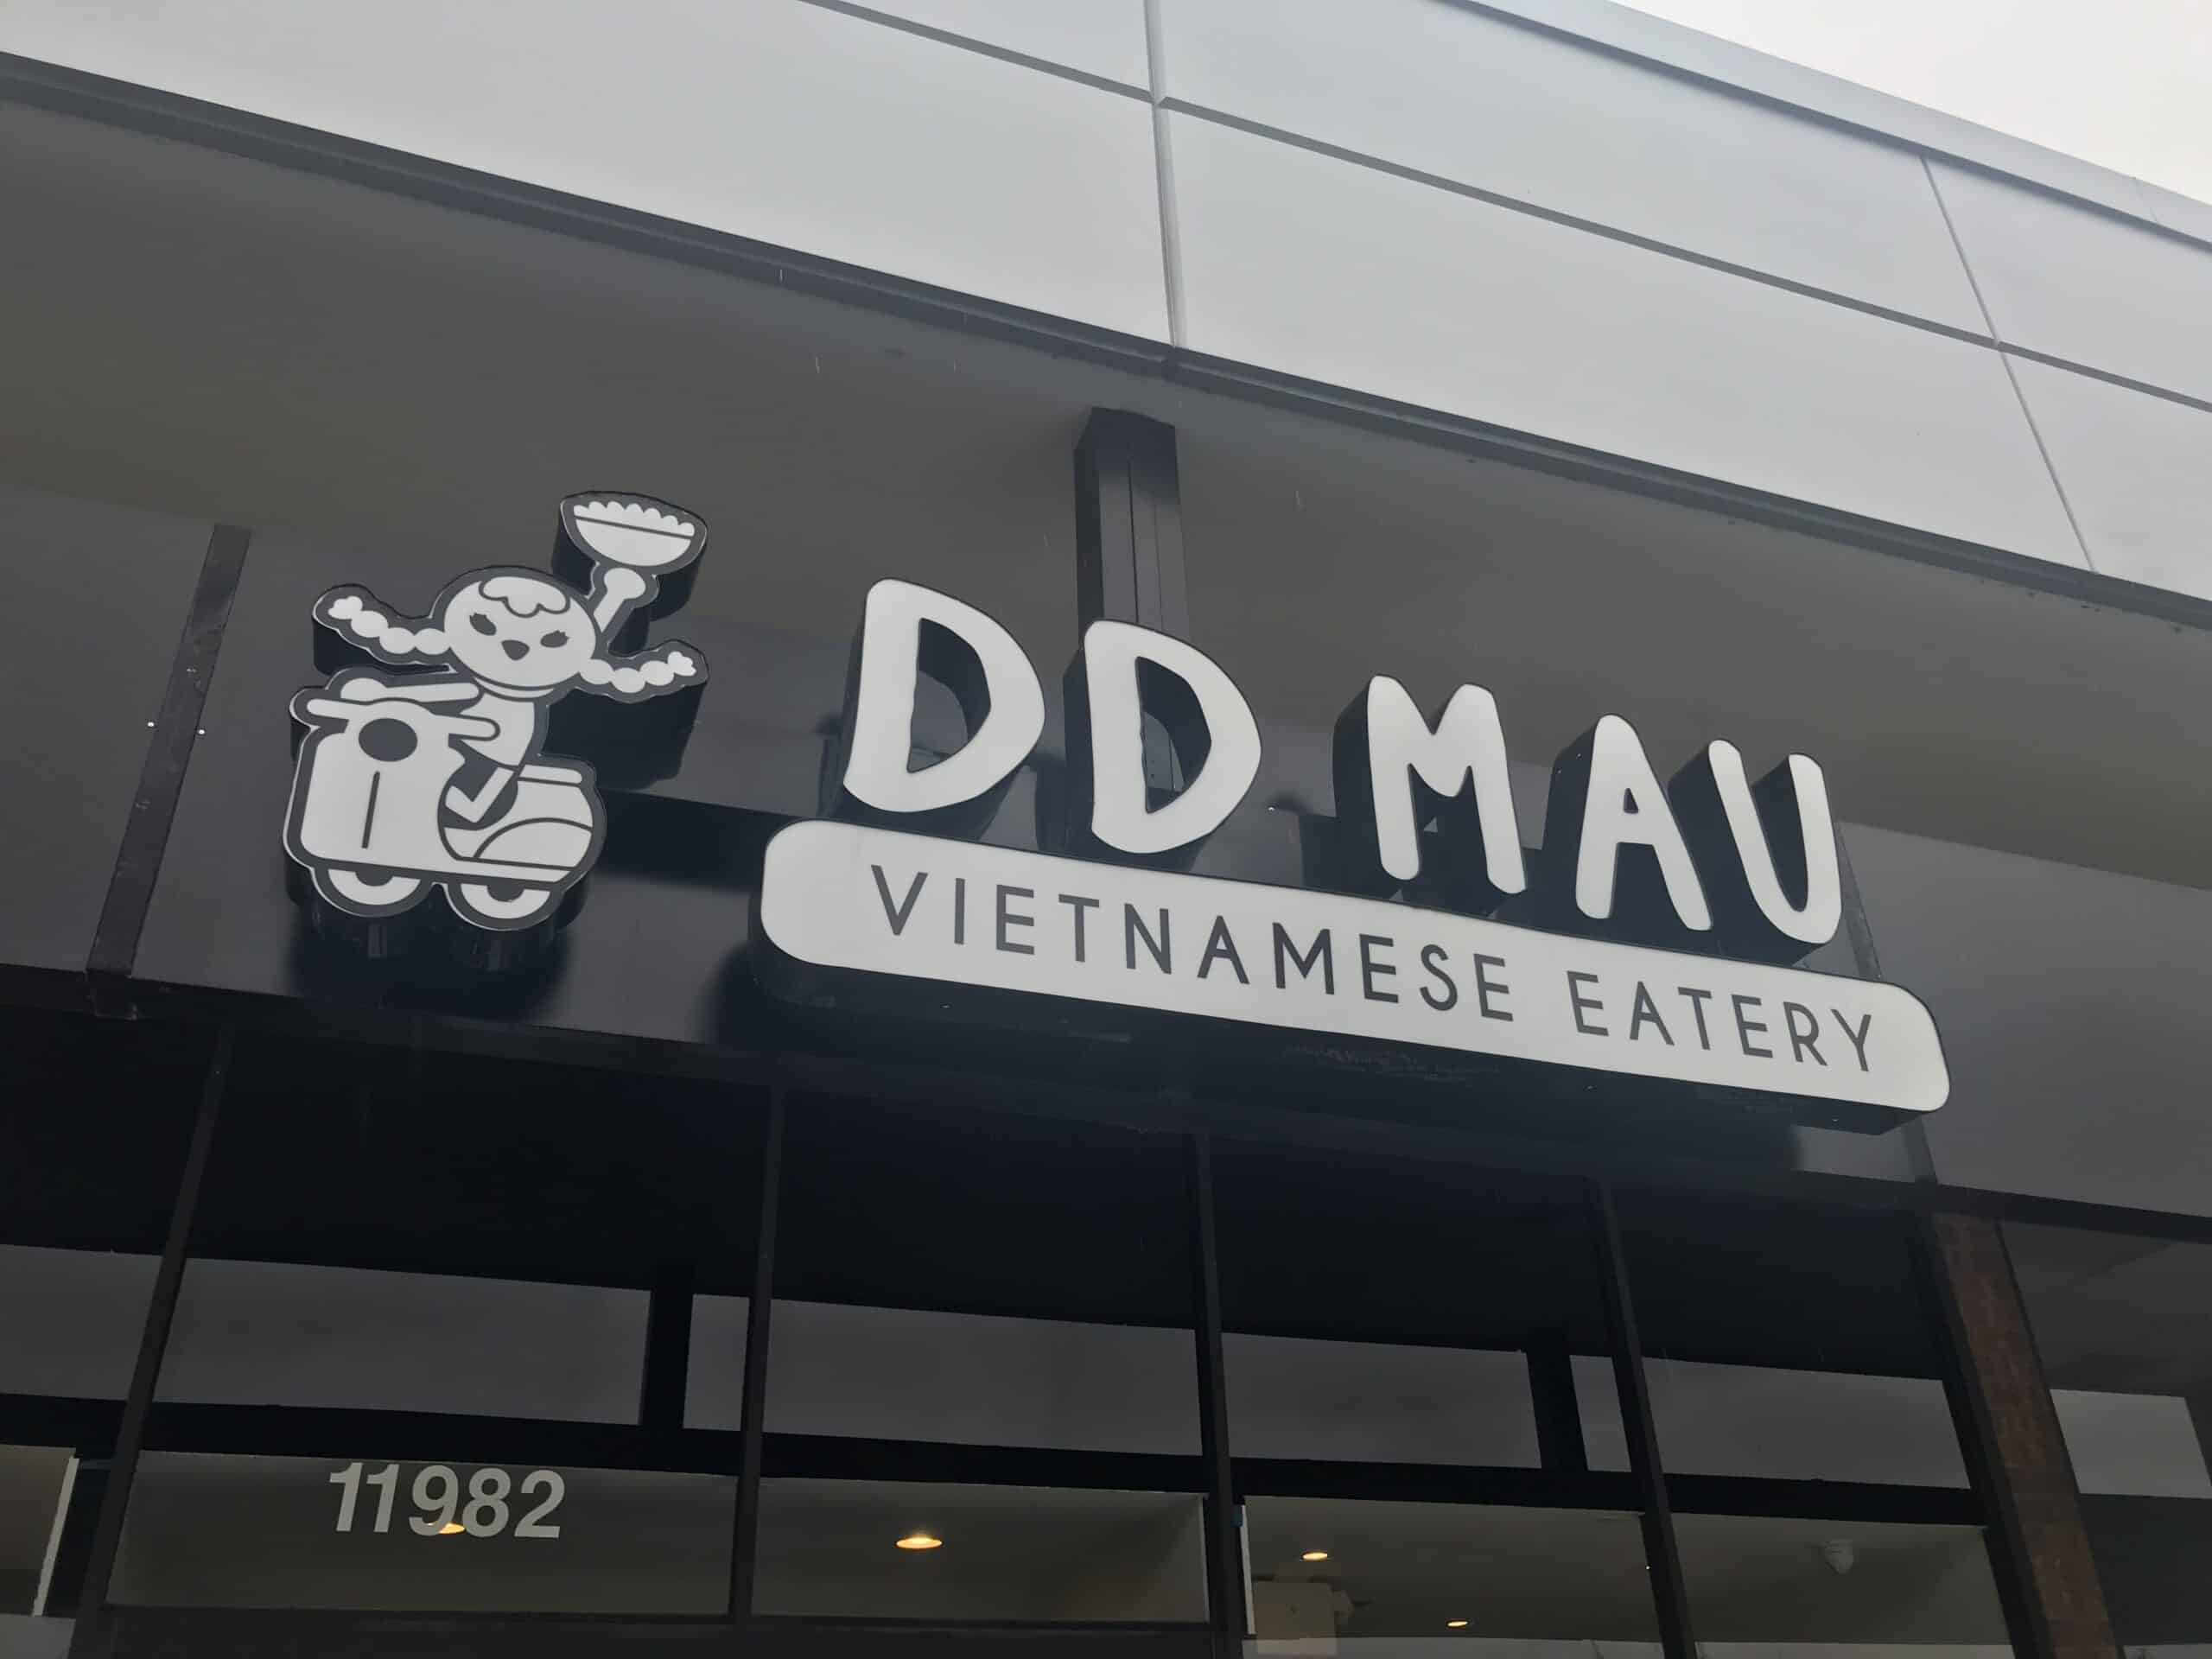 DD Mau Vietnamese Eatery, Maryland Heights, MO